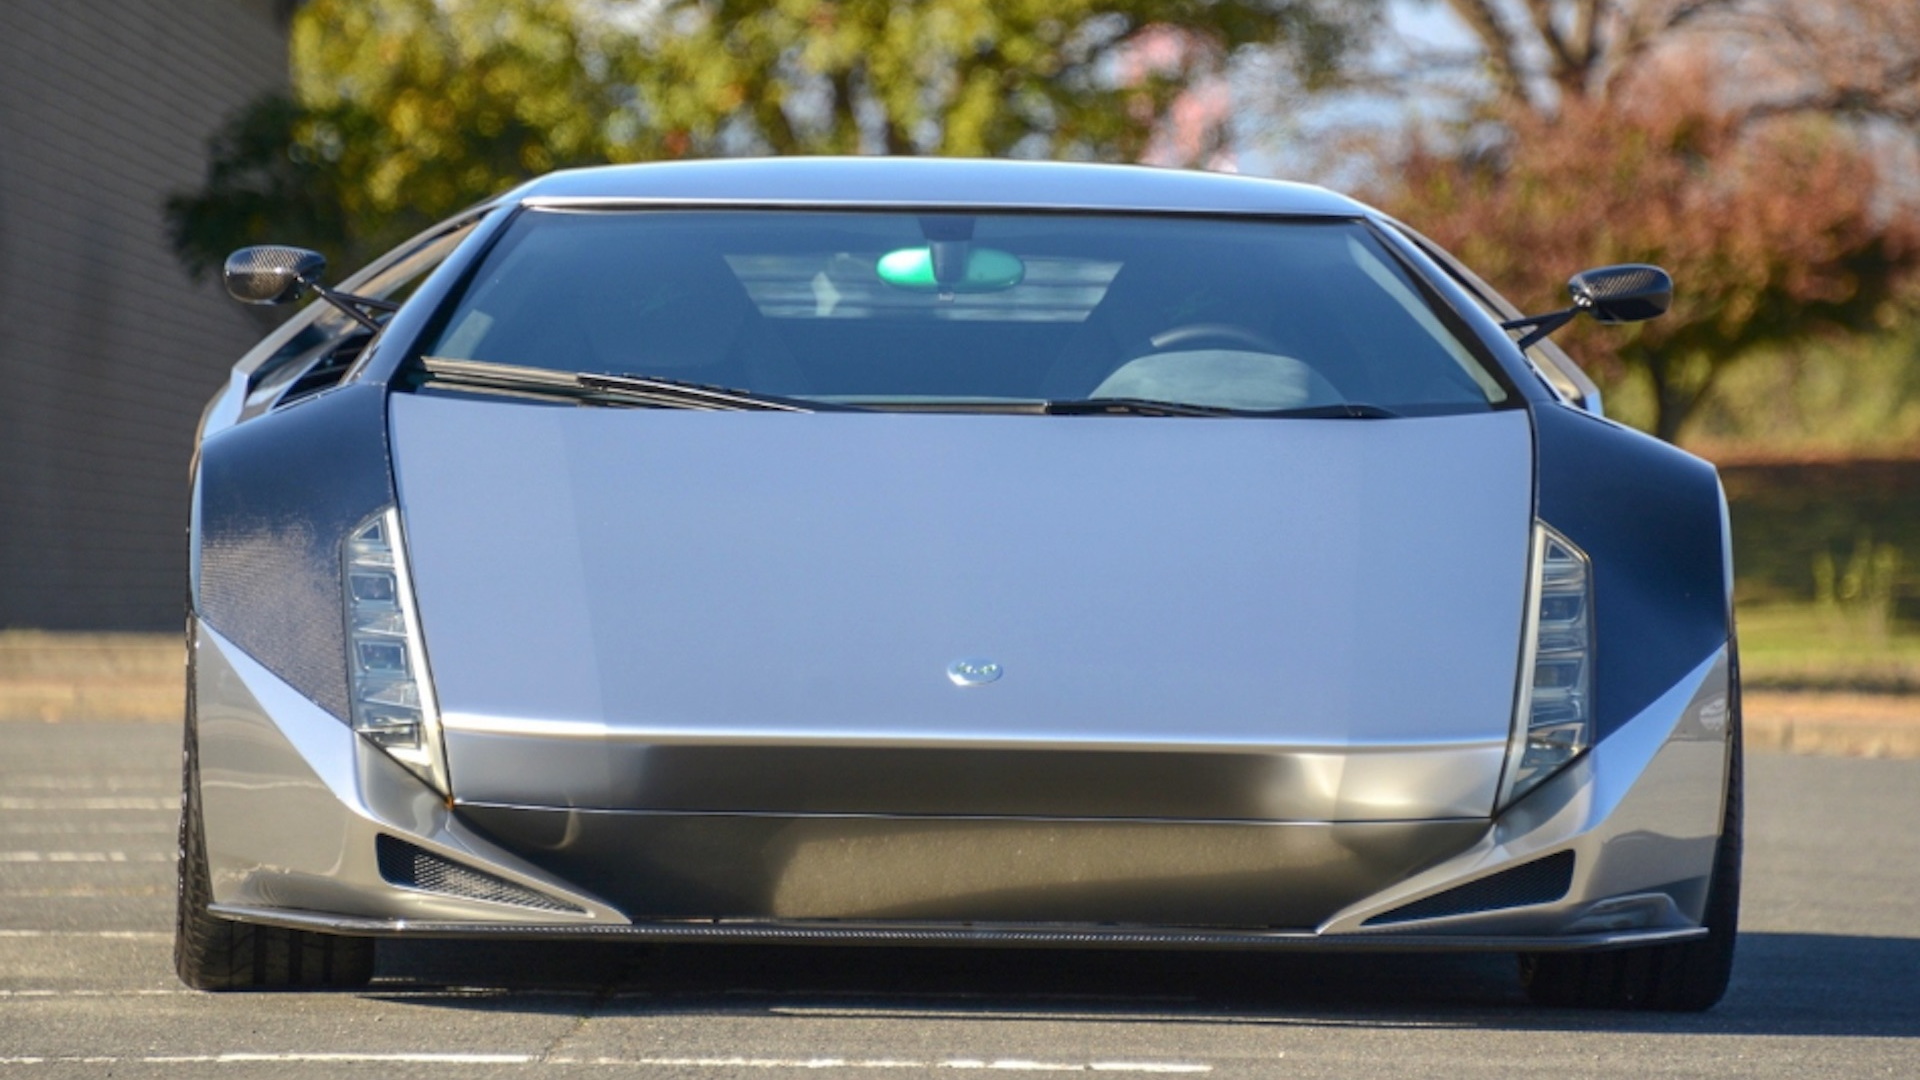 Kode 0 Lamborghini Aventador-based supercar for sale